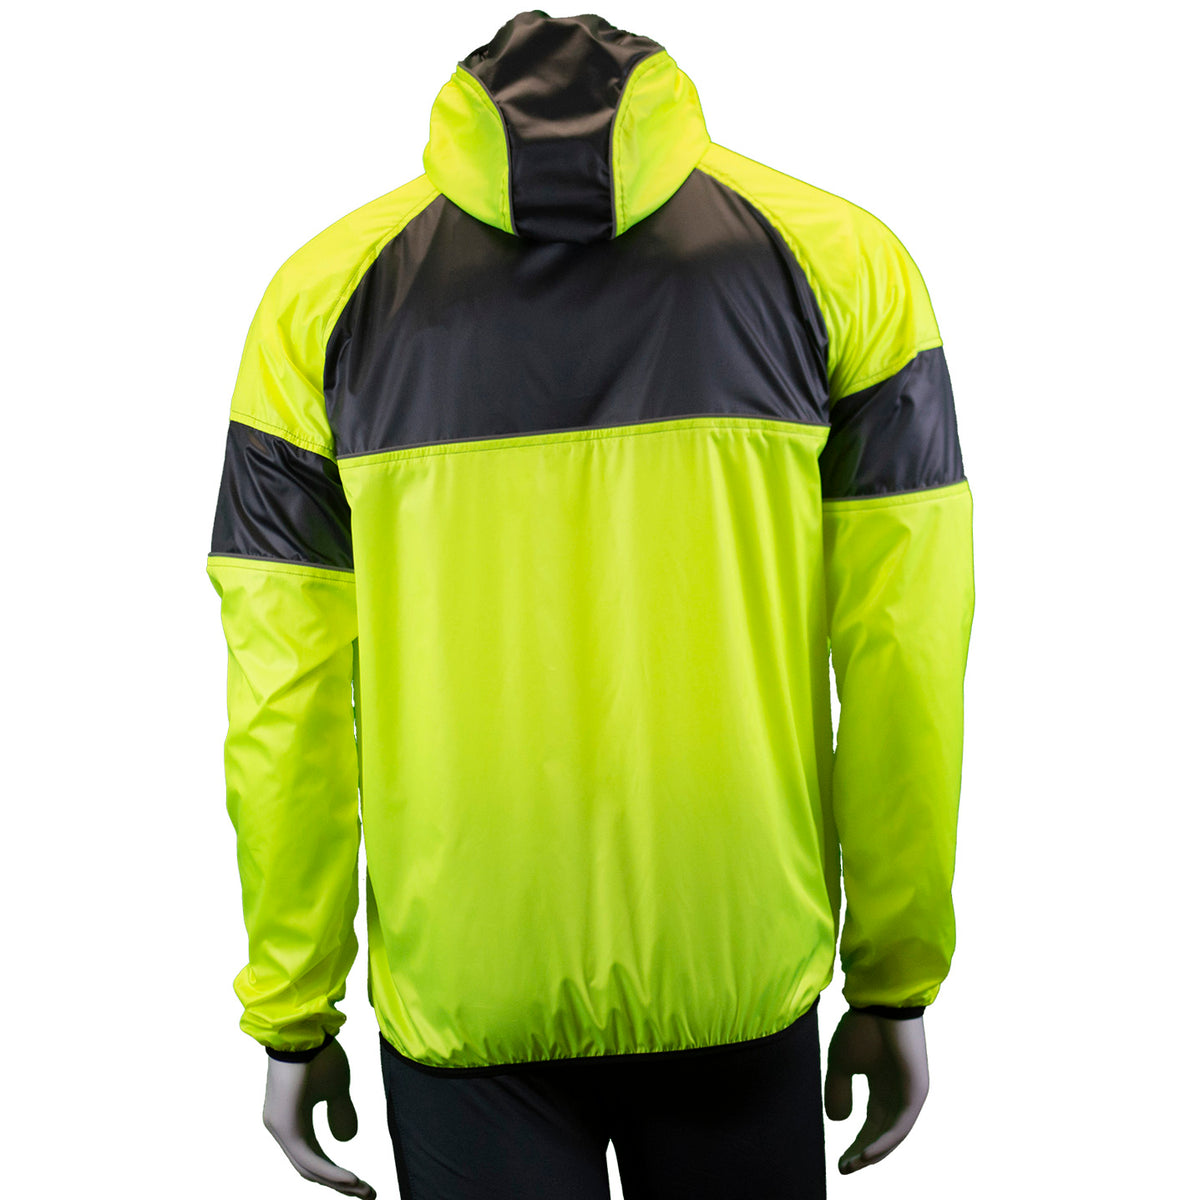 Venture Packable Men's Reflective Jacket in Flo Lime / Graphite